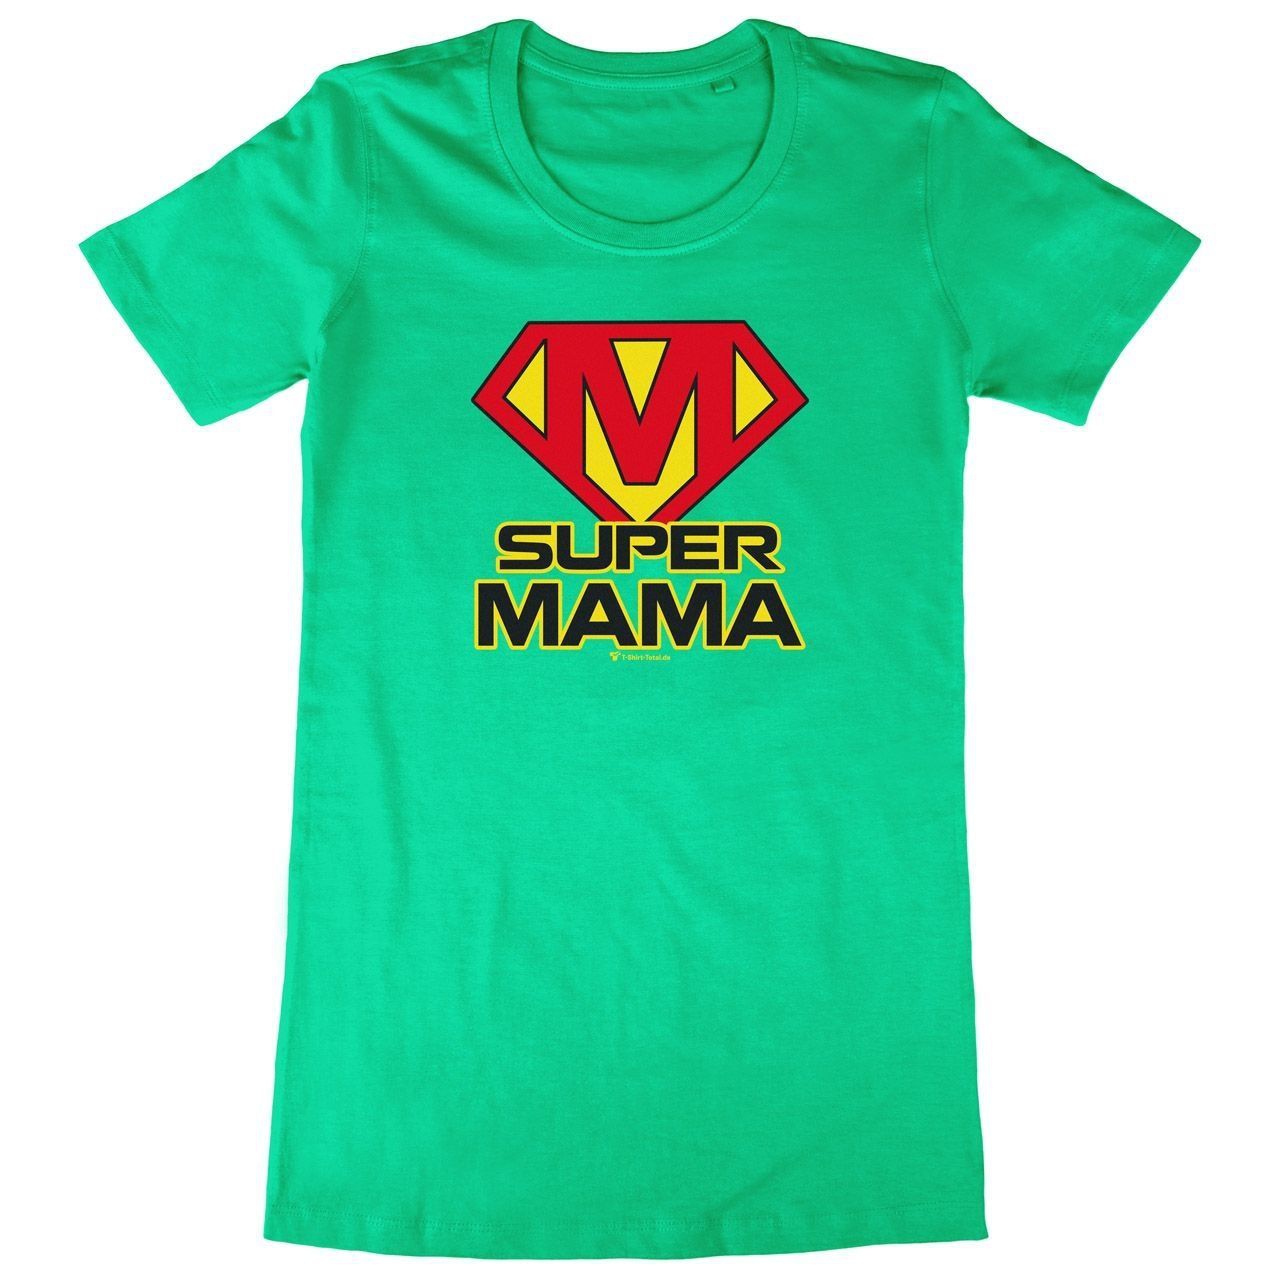 Super Mama Woman Long Shirt grün Small